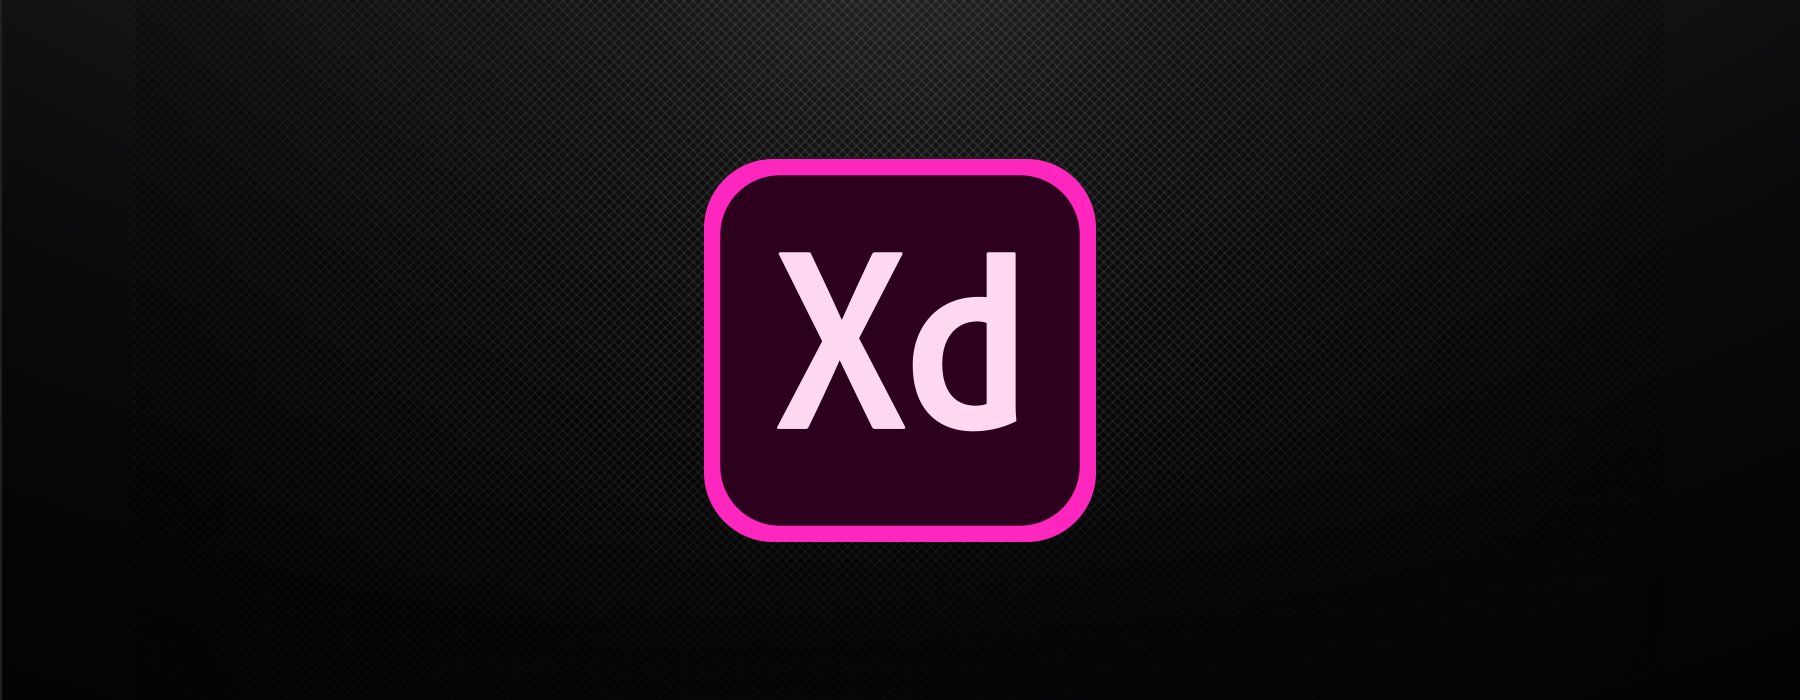 Adobe announces XD CC Starter Pack to offer Adobe XD for free